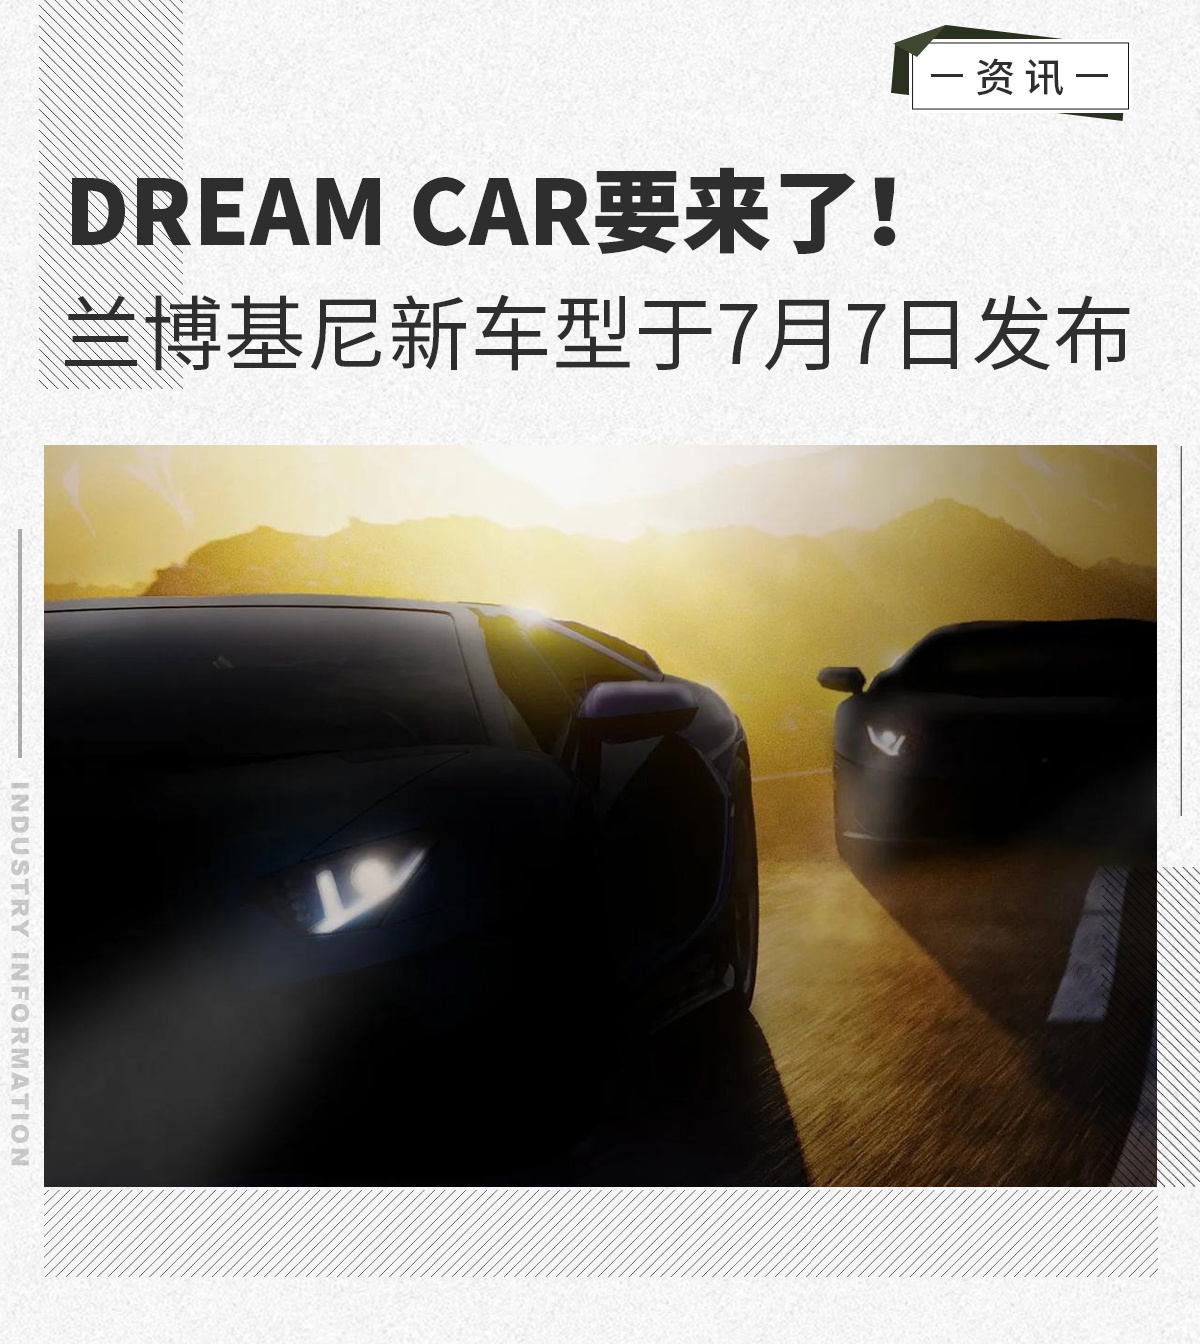 Dream Car要来了！ 兰博基尼新车型于7月7日发布